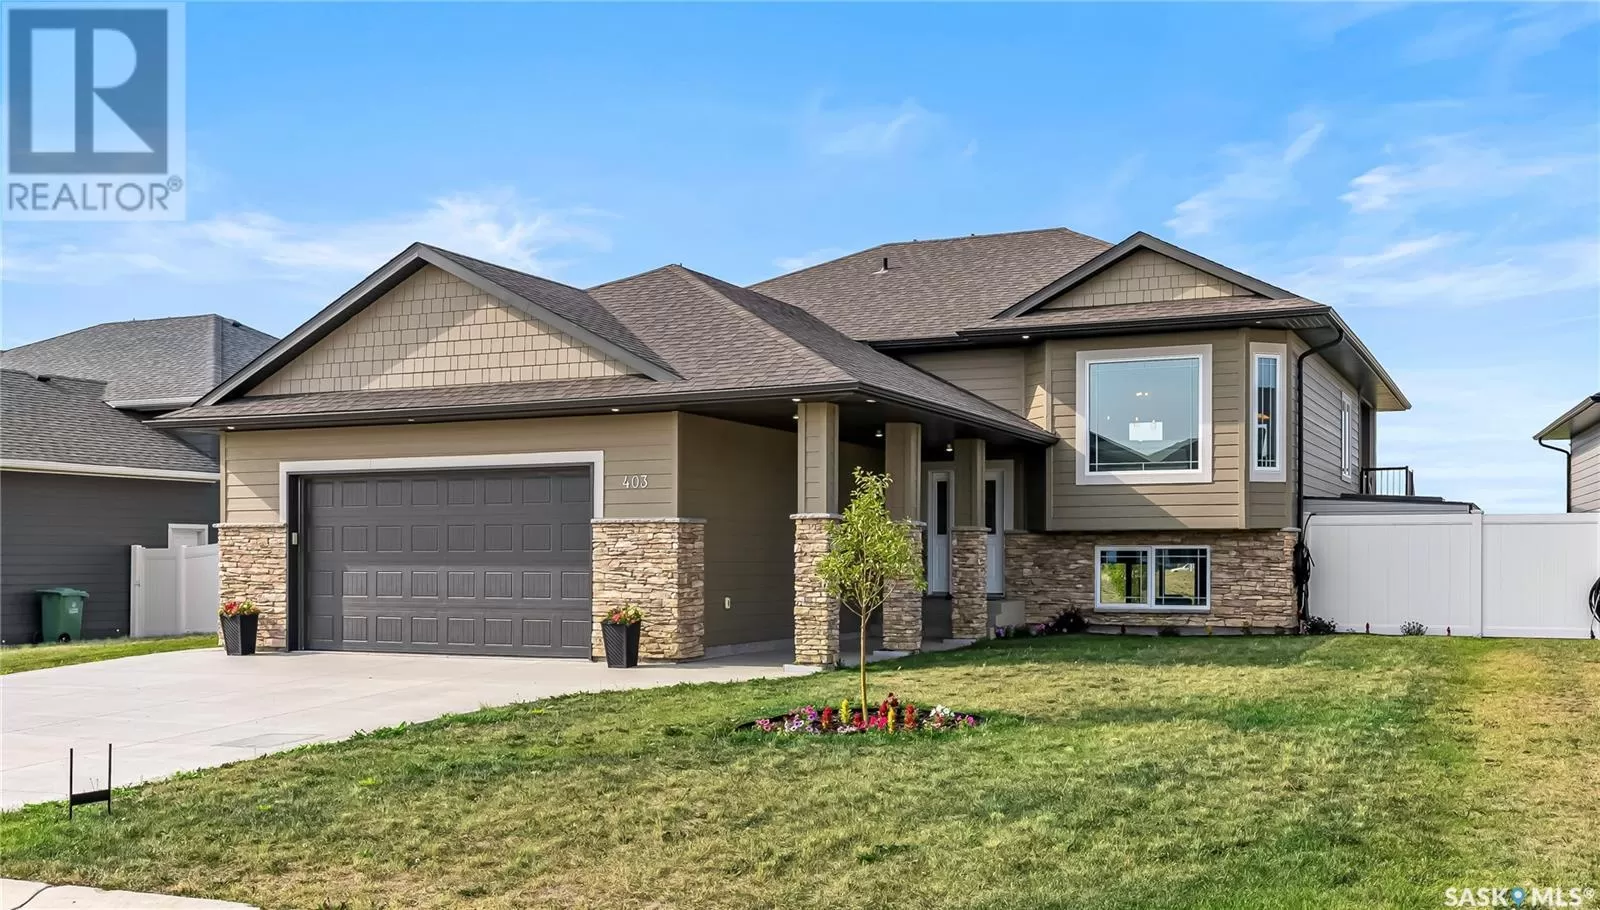 House for rent: 403 Prairie View Drive, Dundurn, Saskatchewan S0K 1K1